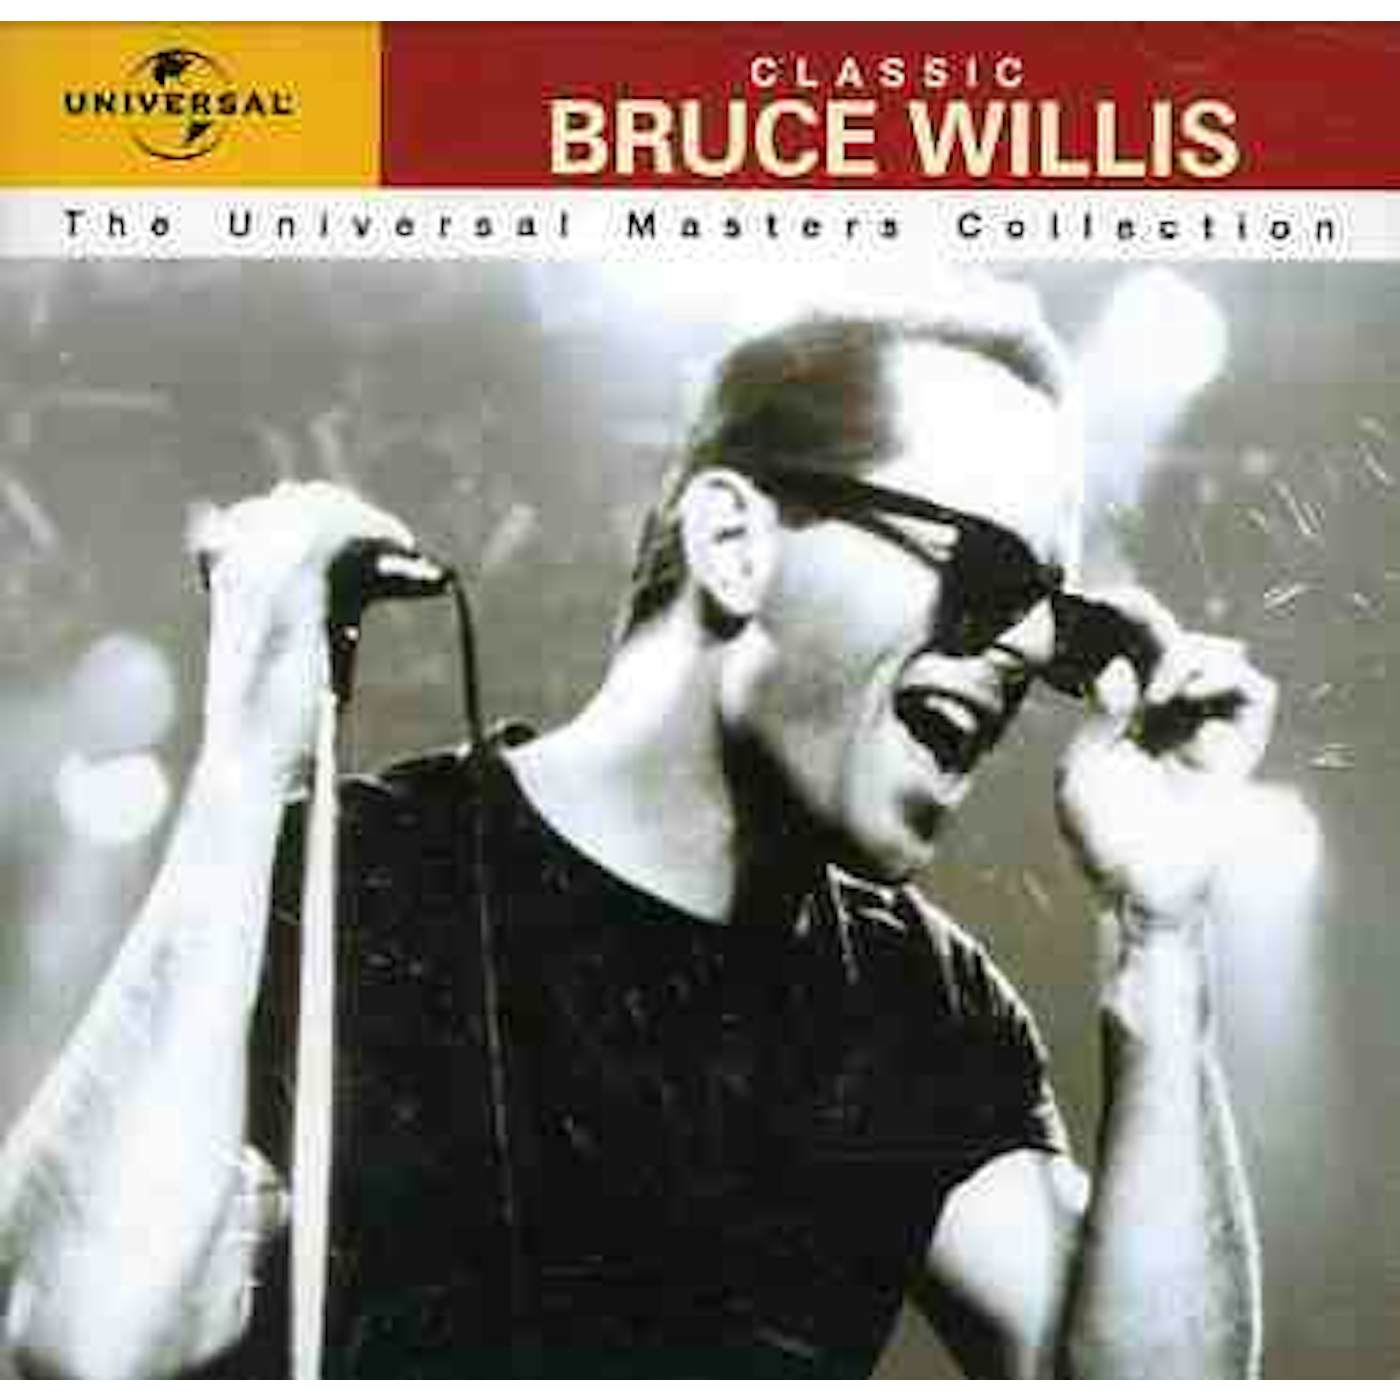 Bruce Willis UNIVERSAL MASTERS CD